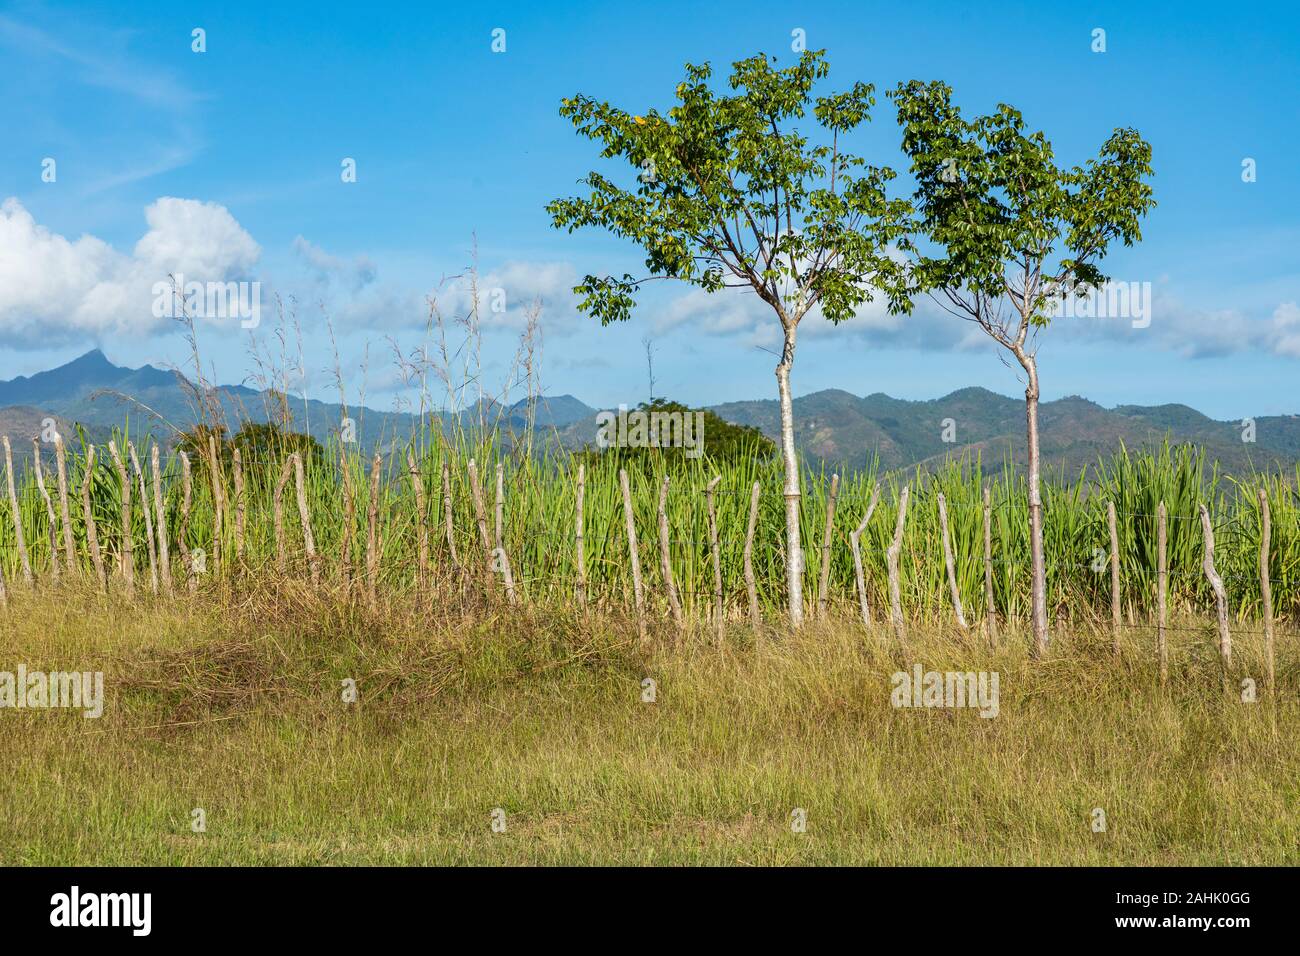 Sugar cane plantation in Cuba Stock Photo